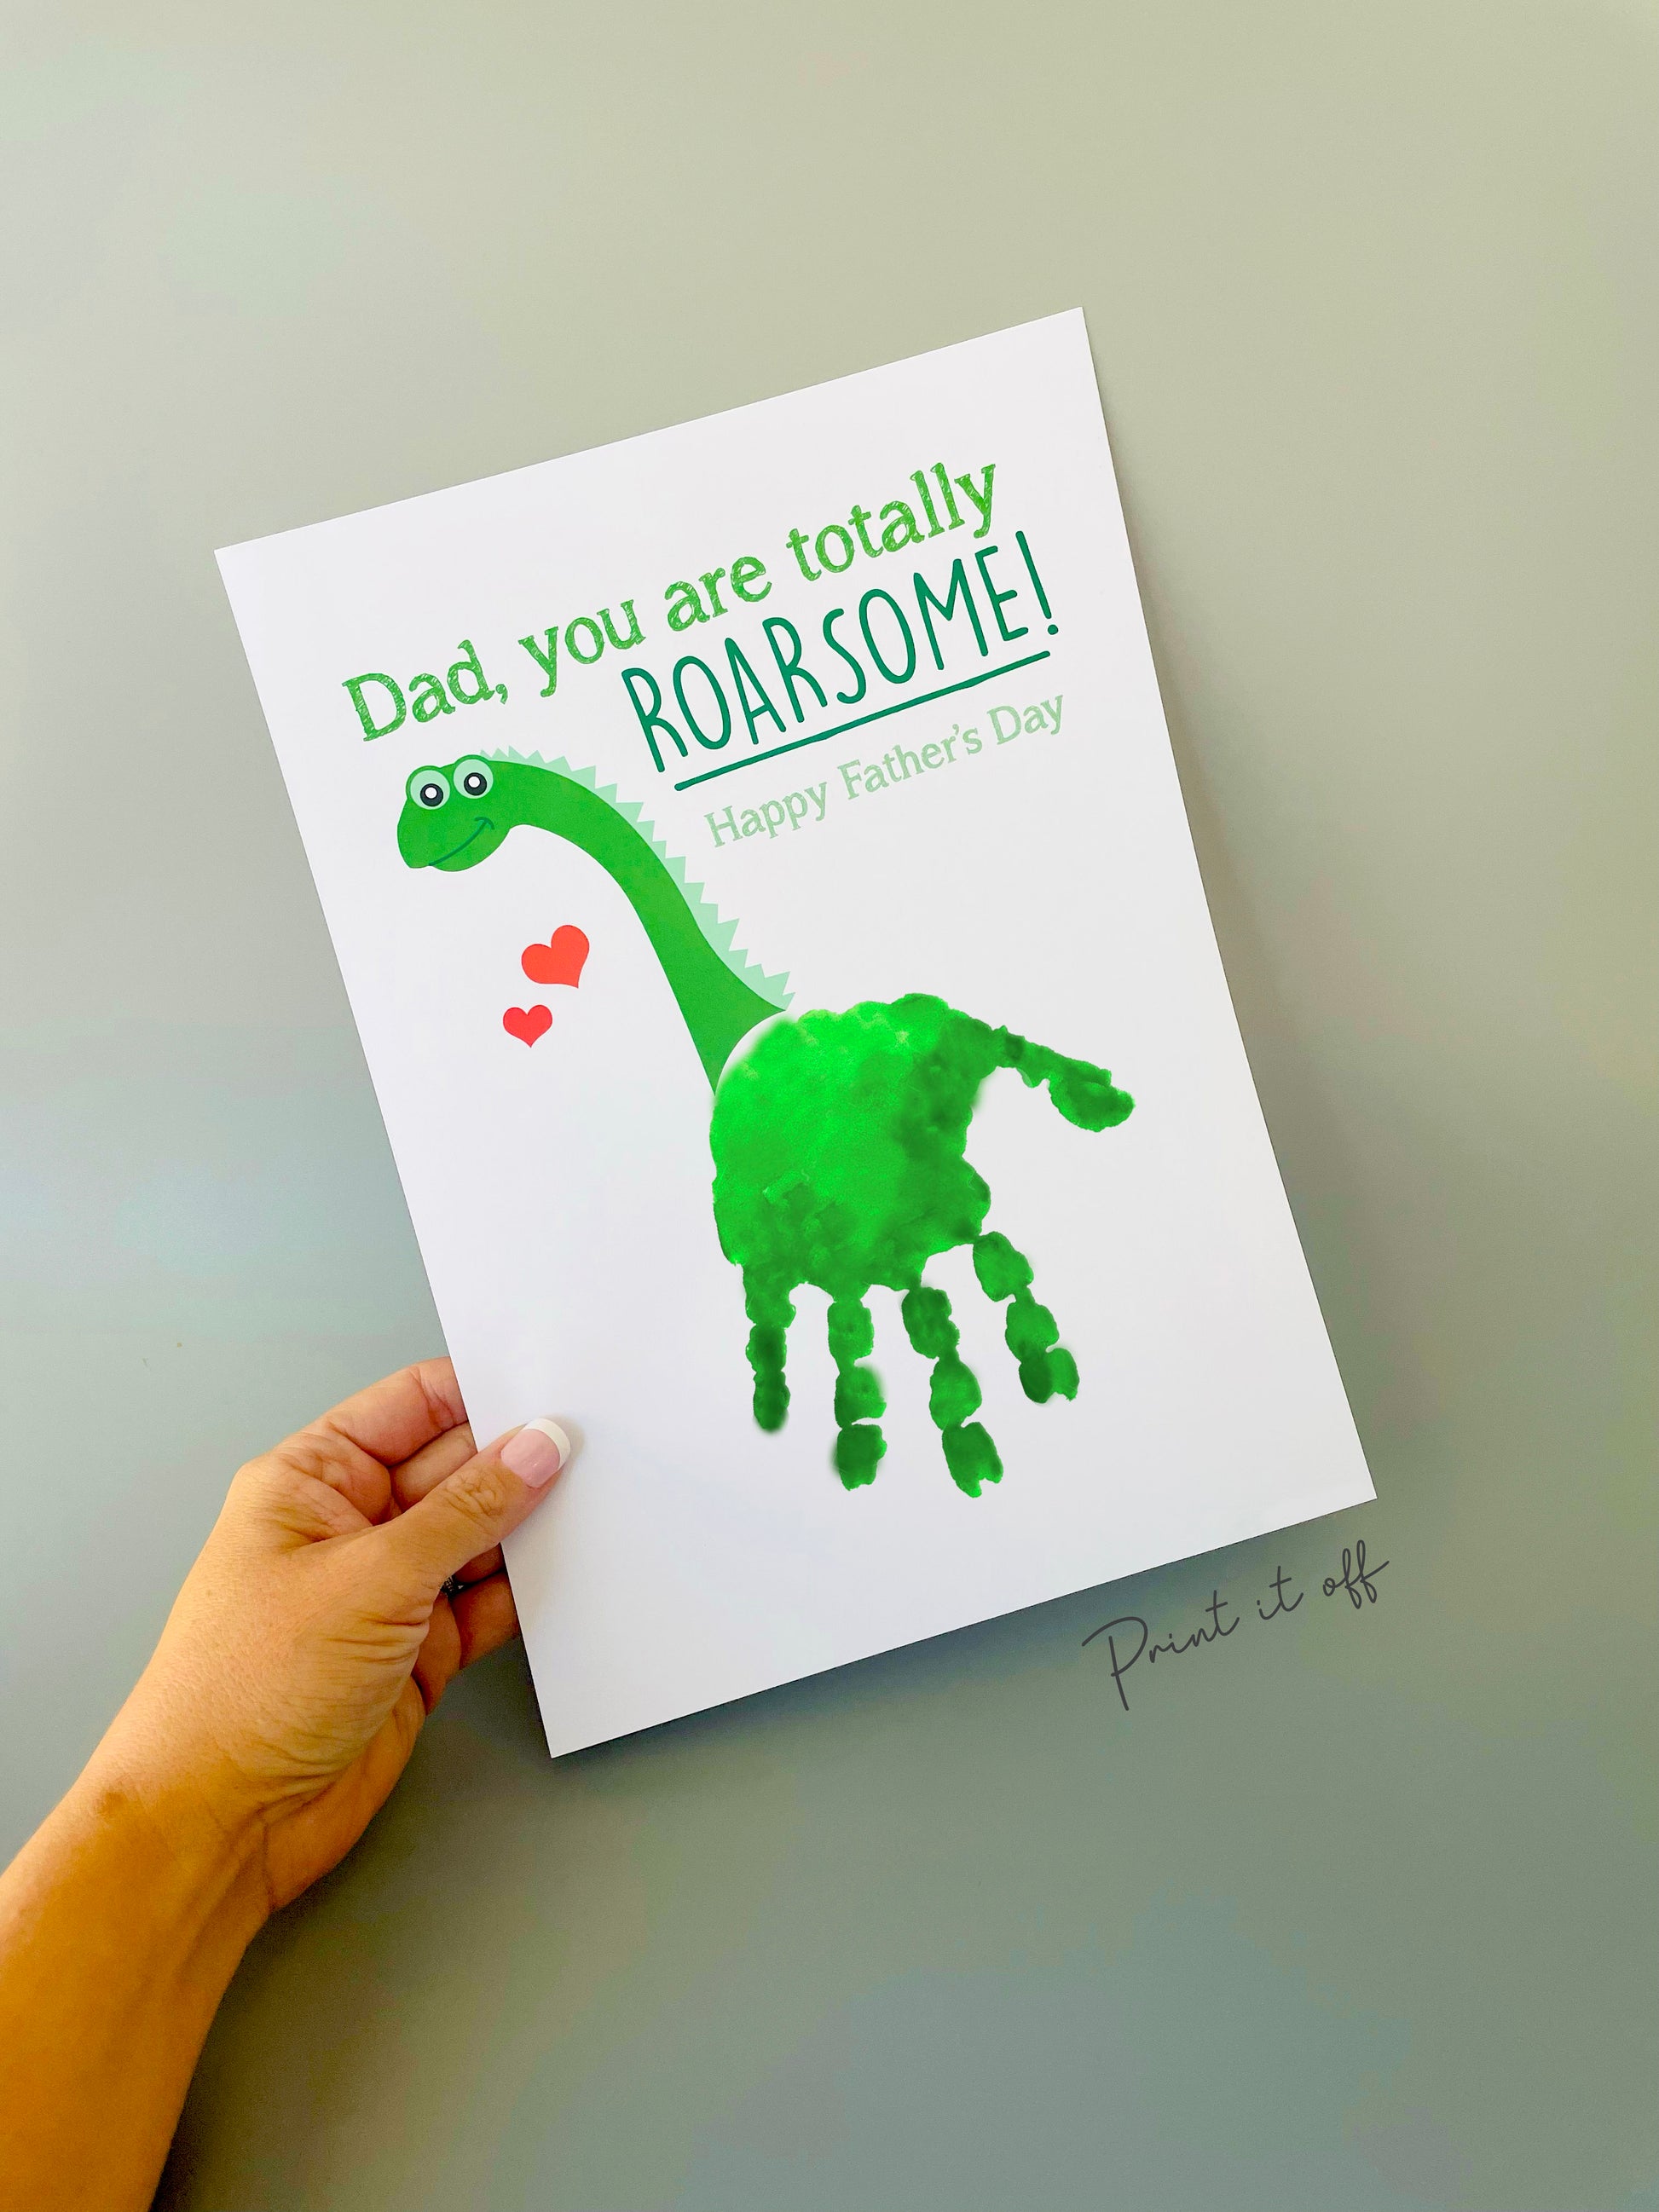 Totally Roarsome, Cute Dinosaur